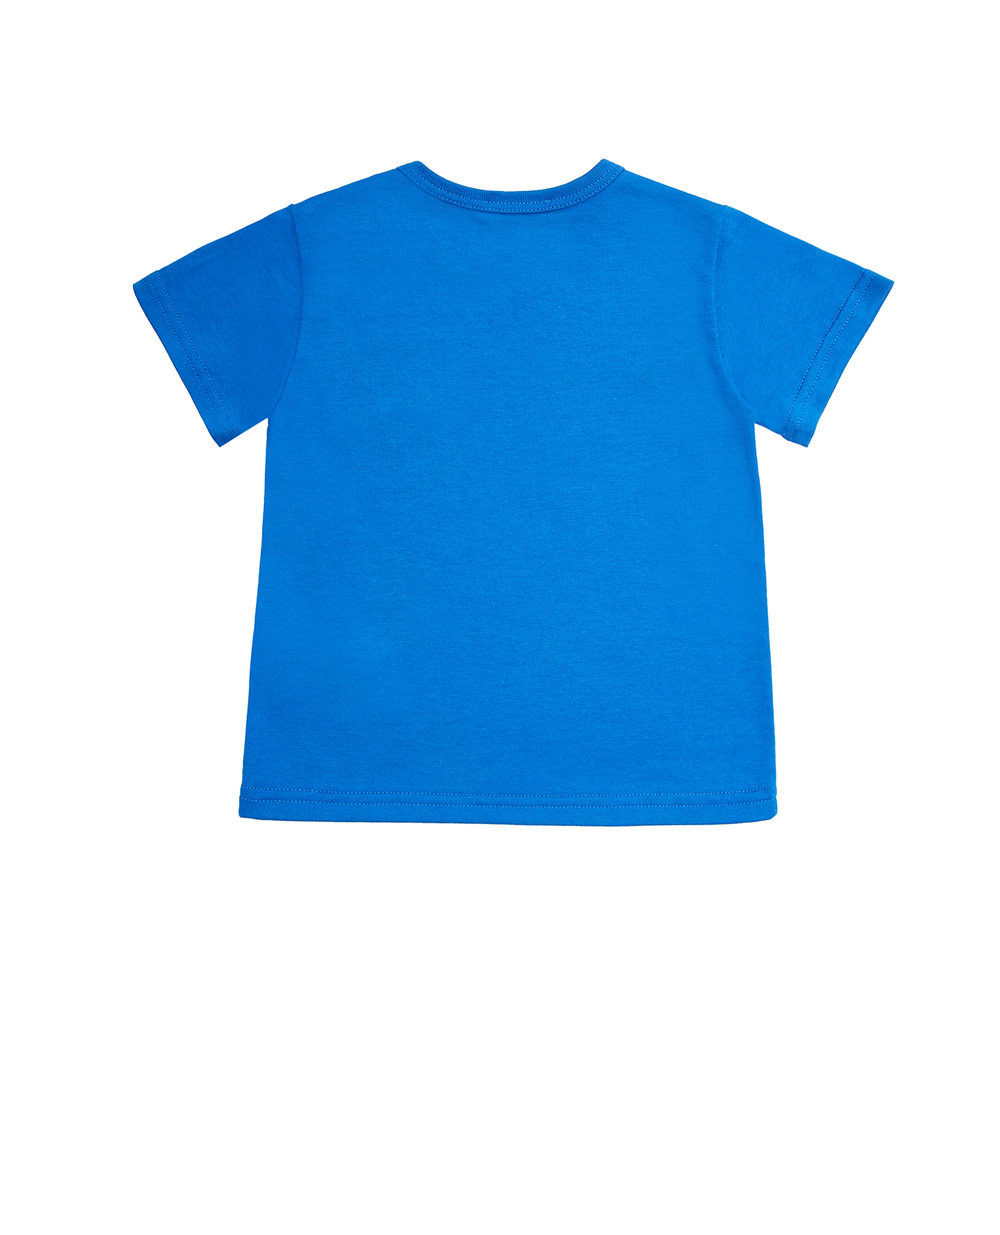 Футболка Dolce&Gabbana Kids L1JT7T-G7OLK-, синий цвет • Купить в интернет-магазине Kameron